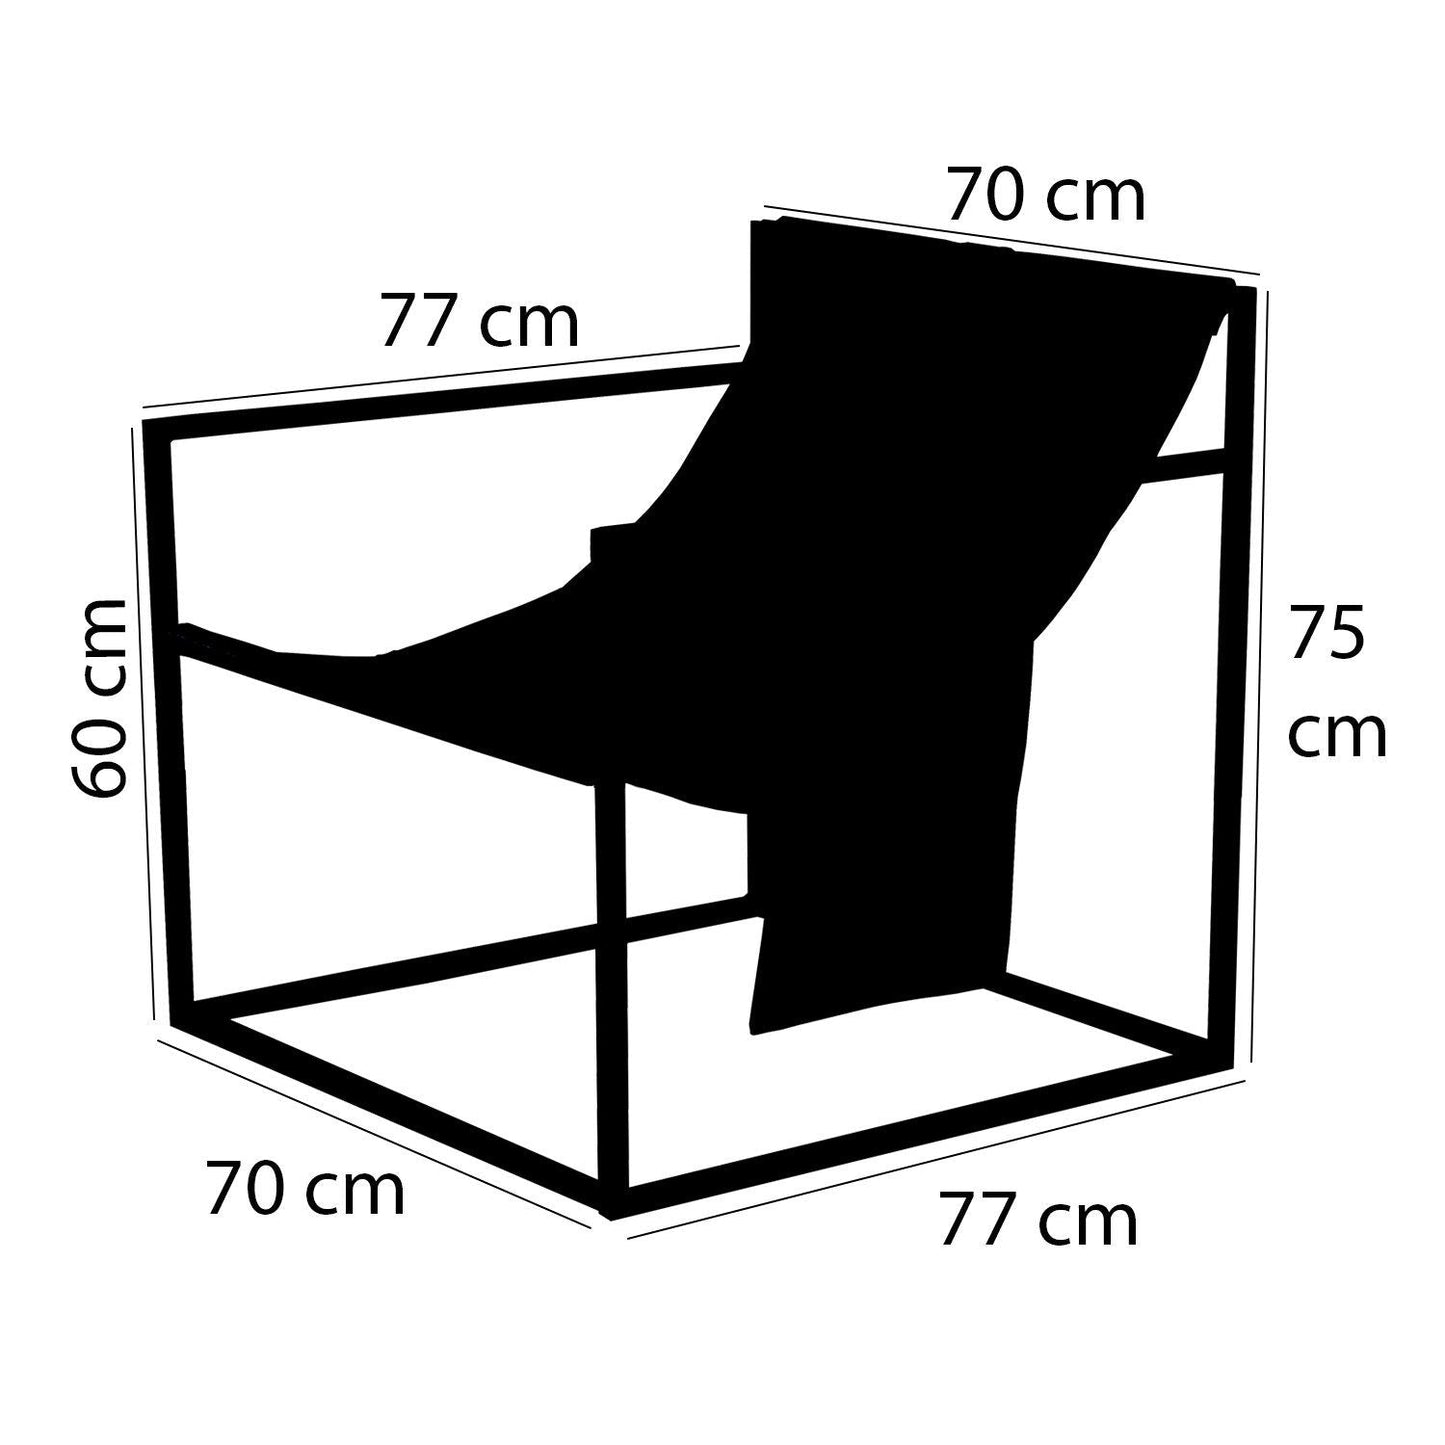 Nordic - Wing Chair lænestol / Outlet